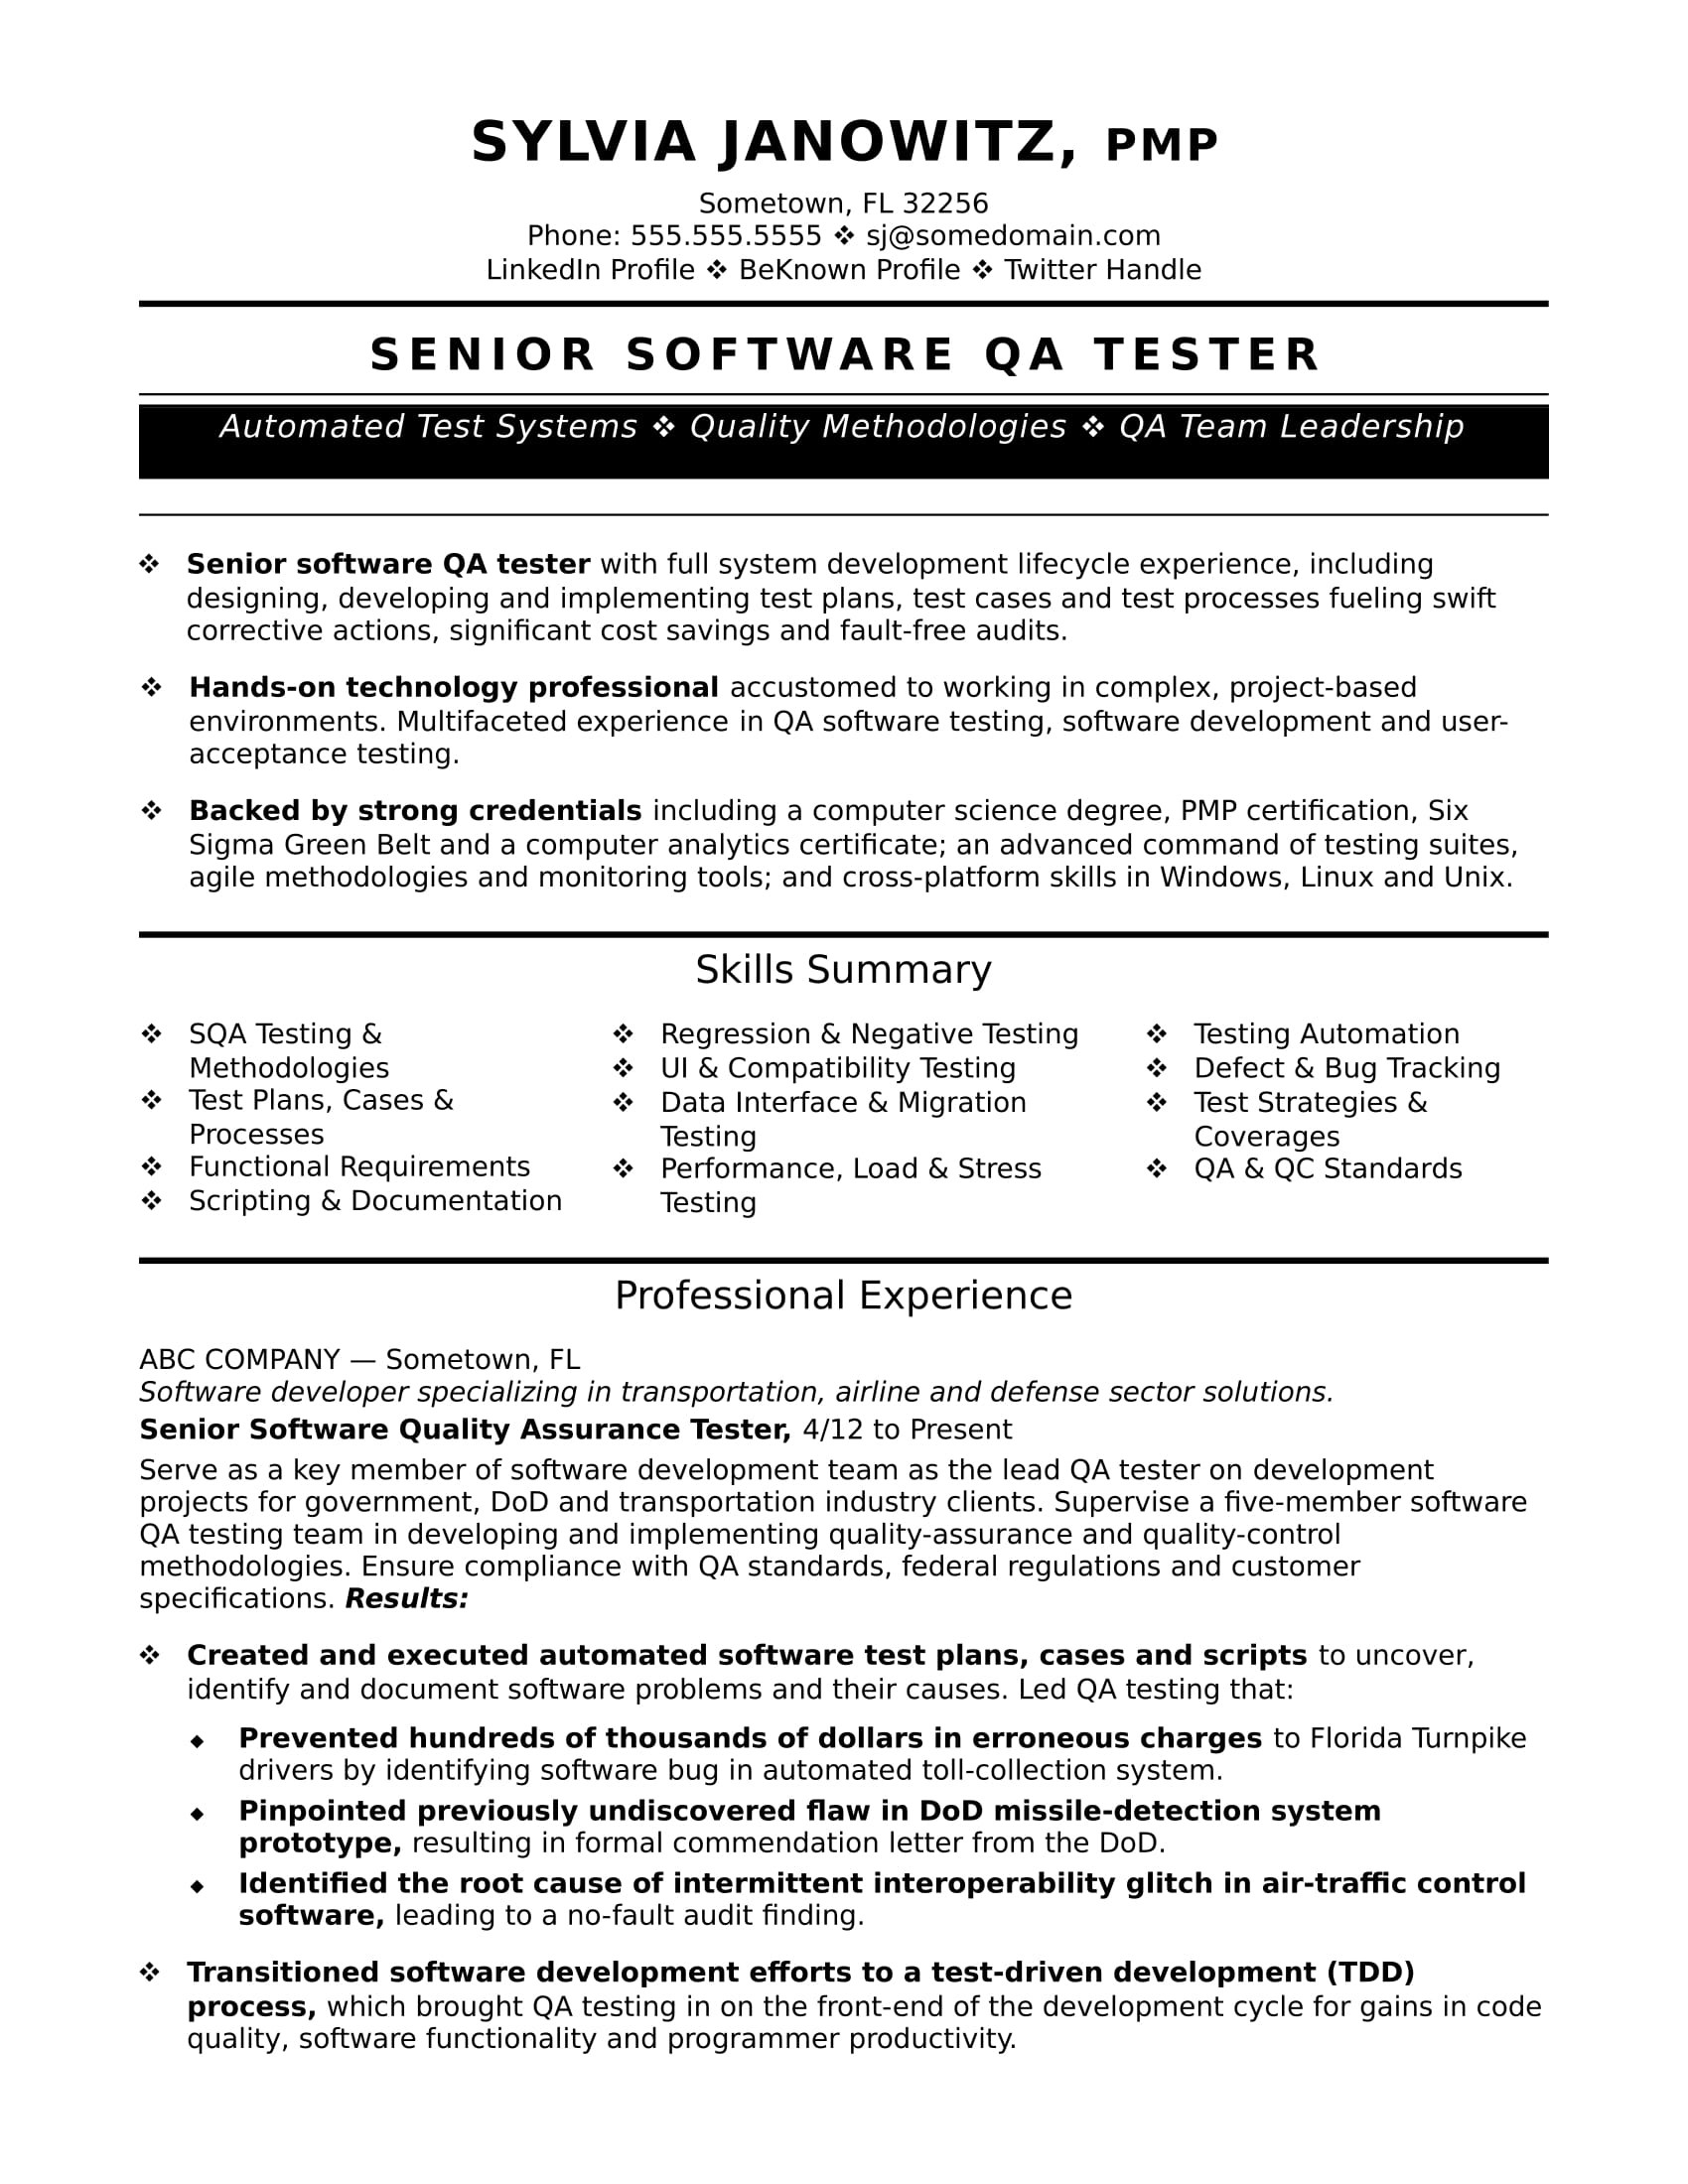 Manual Testing Resume Sample for 2 Years Experience Experienced Qa software Tester Resume Sample Monster.com